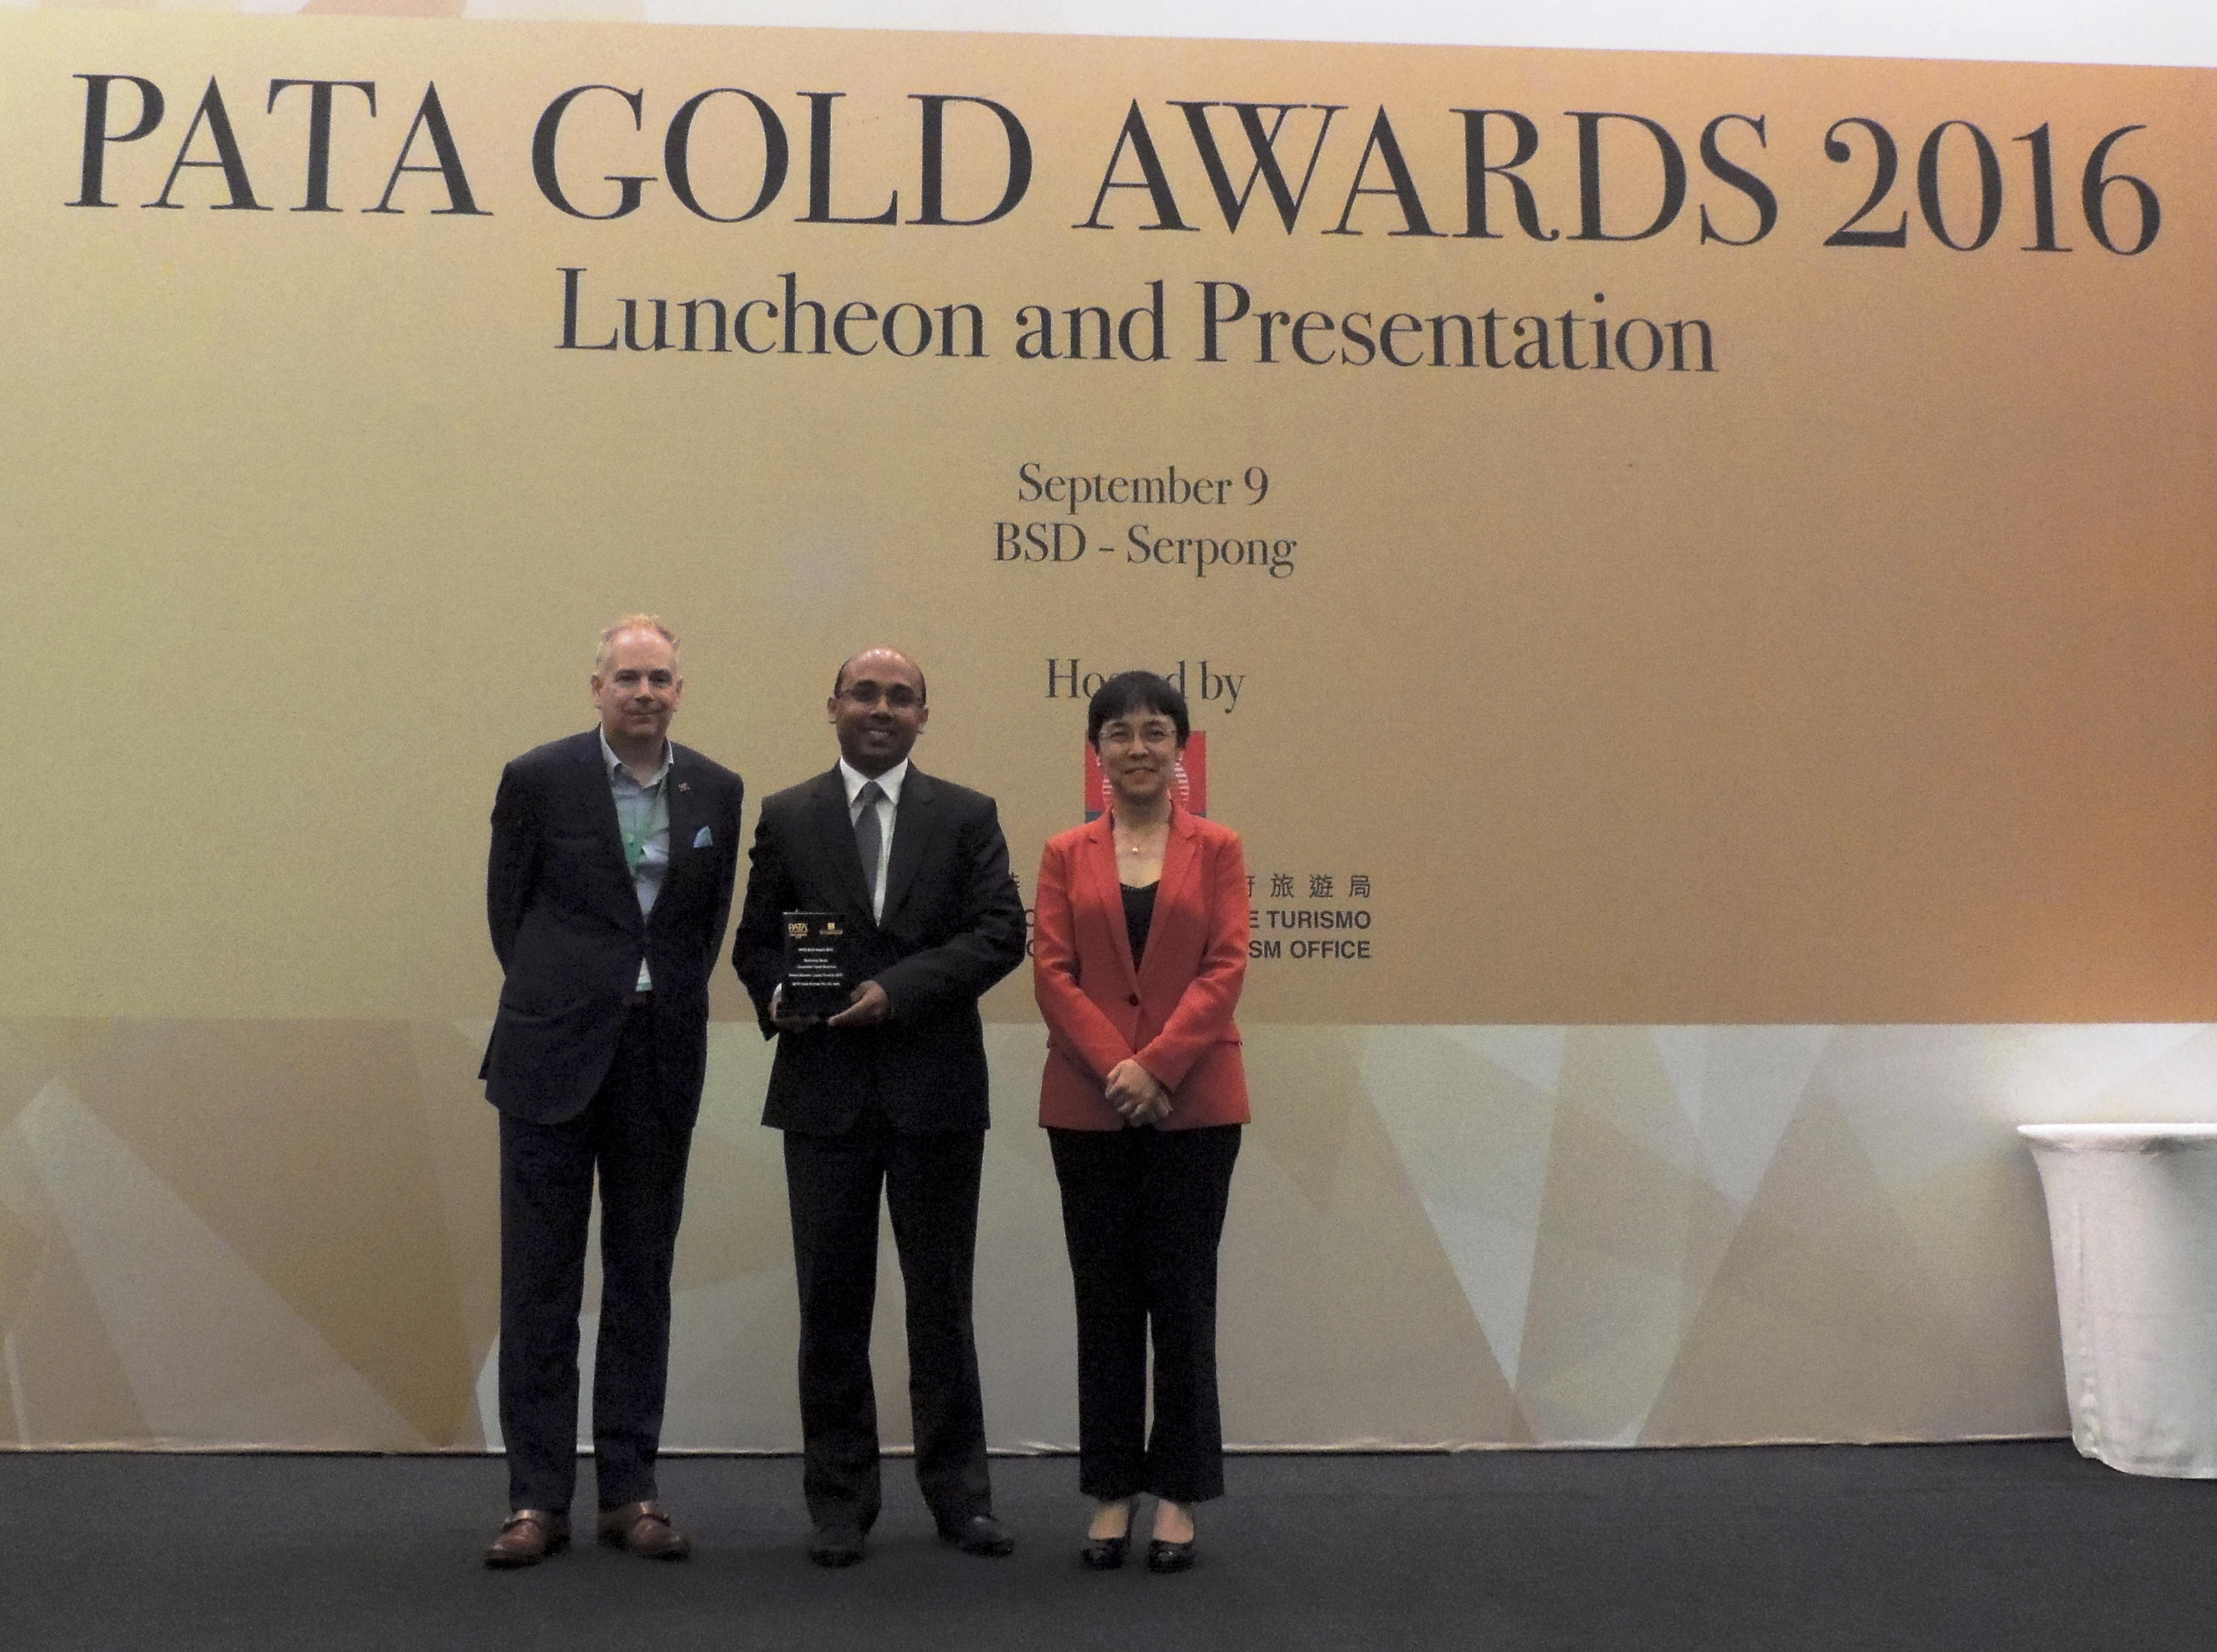 sotc-wins-the-pata-gold-award-2016